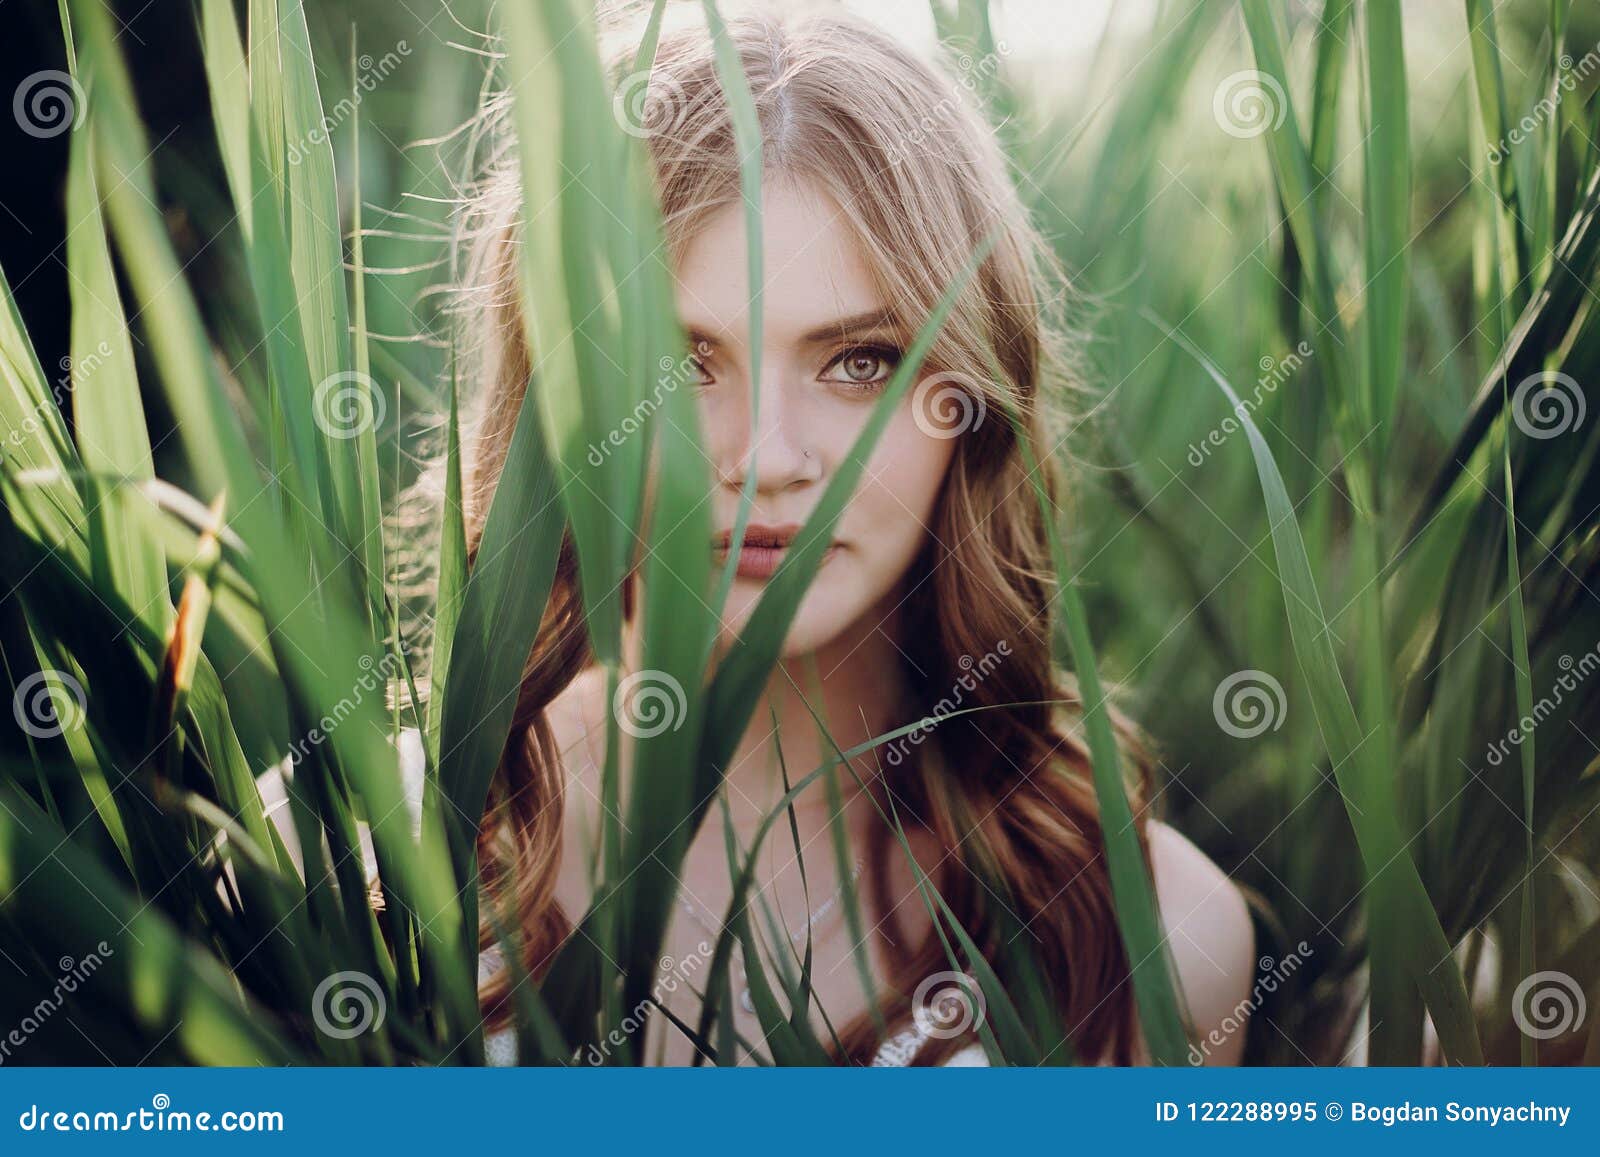 Beautiful Boho Girl Embracing in Grass at Sunset Light Near Lake Stock